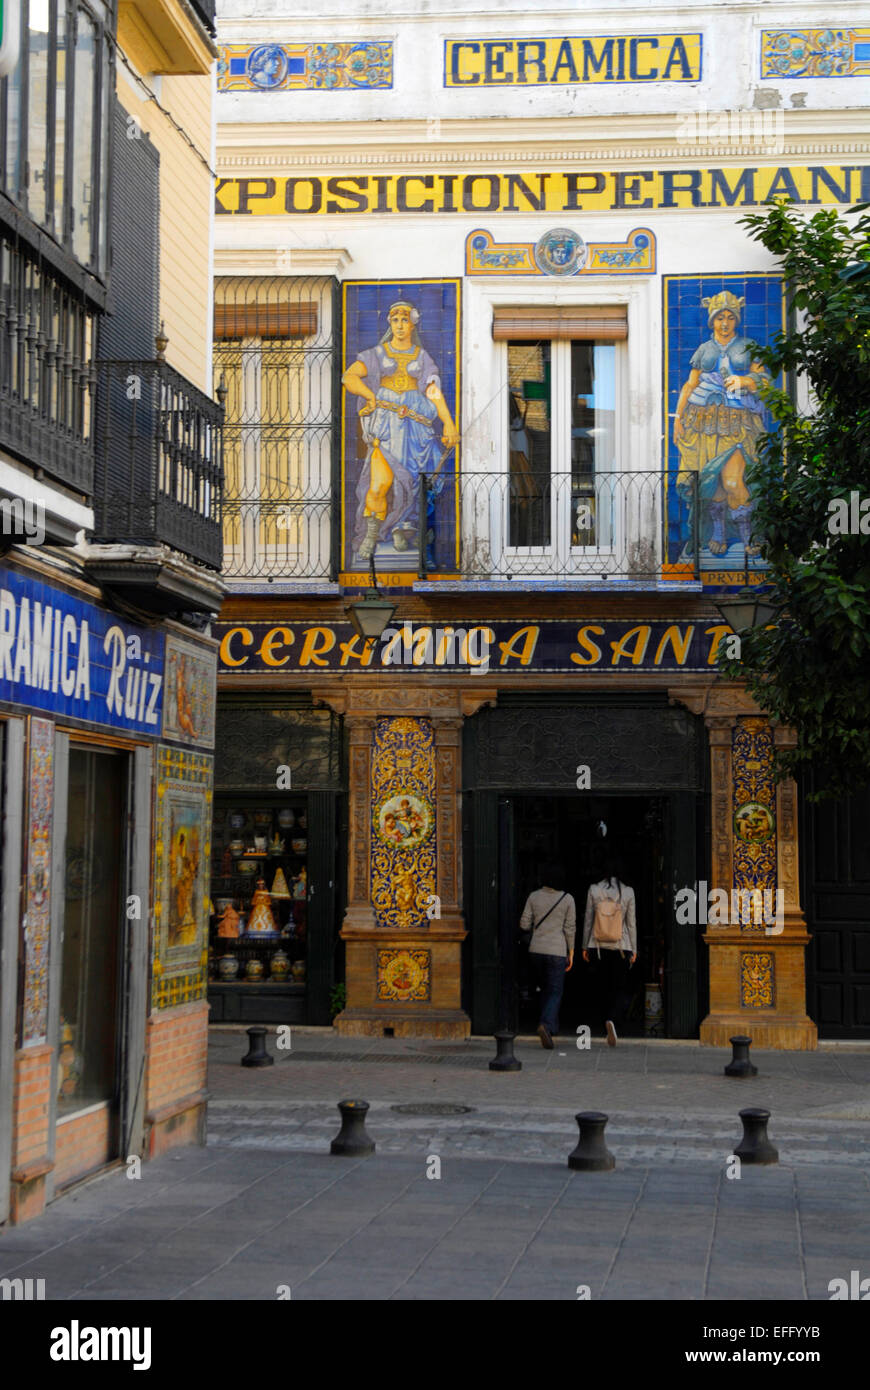 Ceramic Shop, Seville, Spain Stock Photo